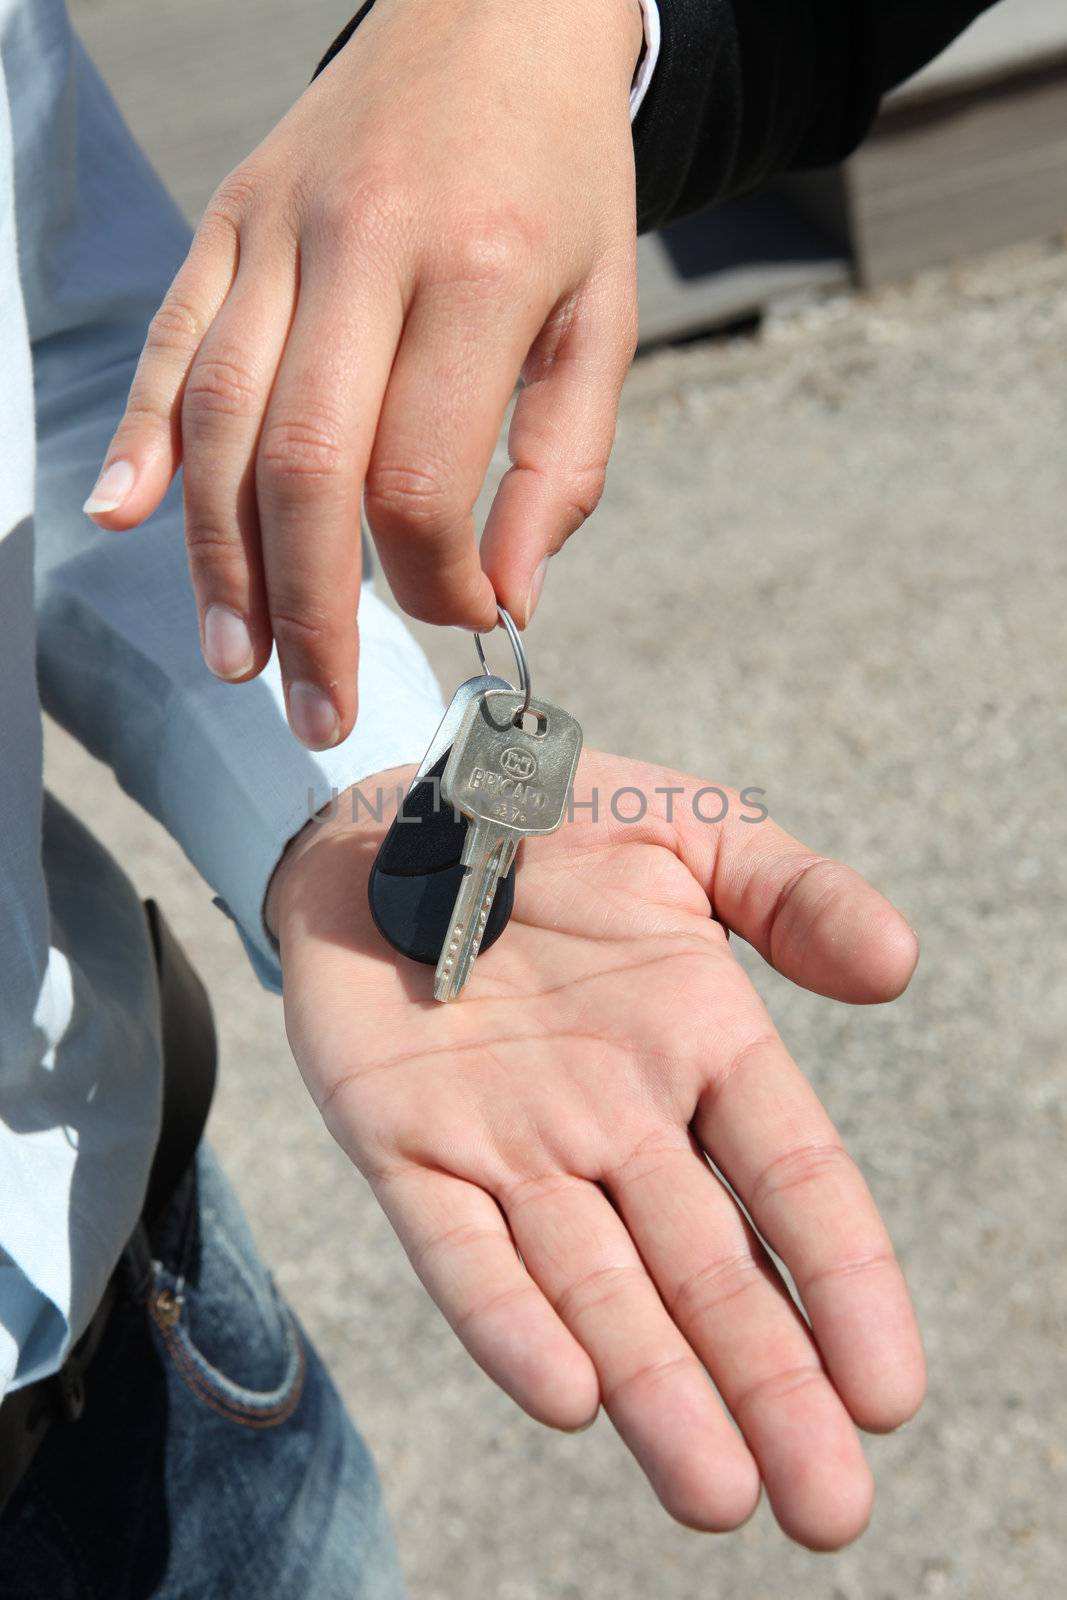 Saleswoman handing key to man by phovoir